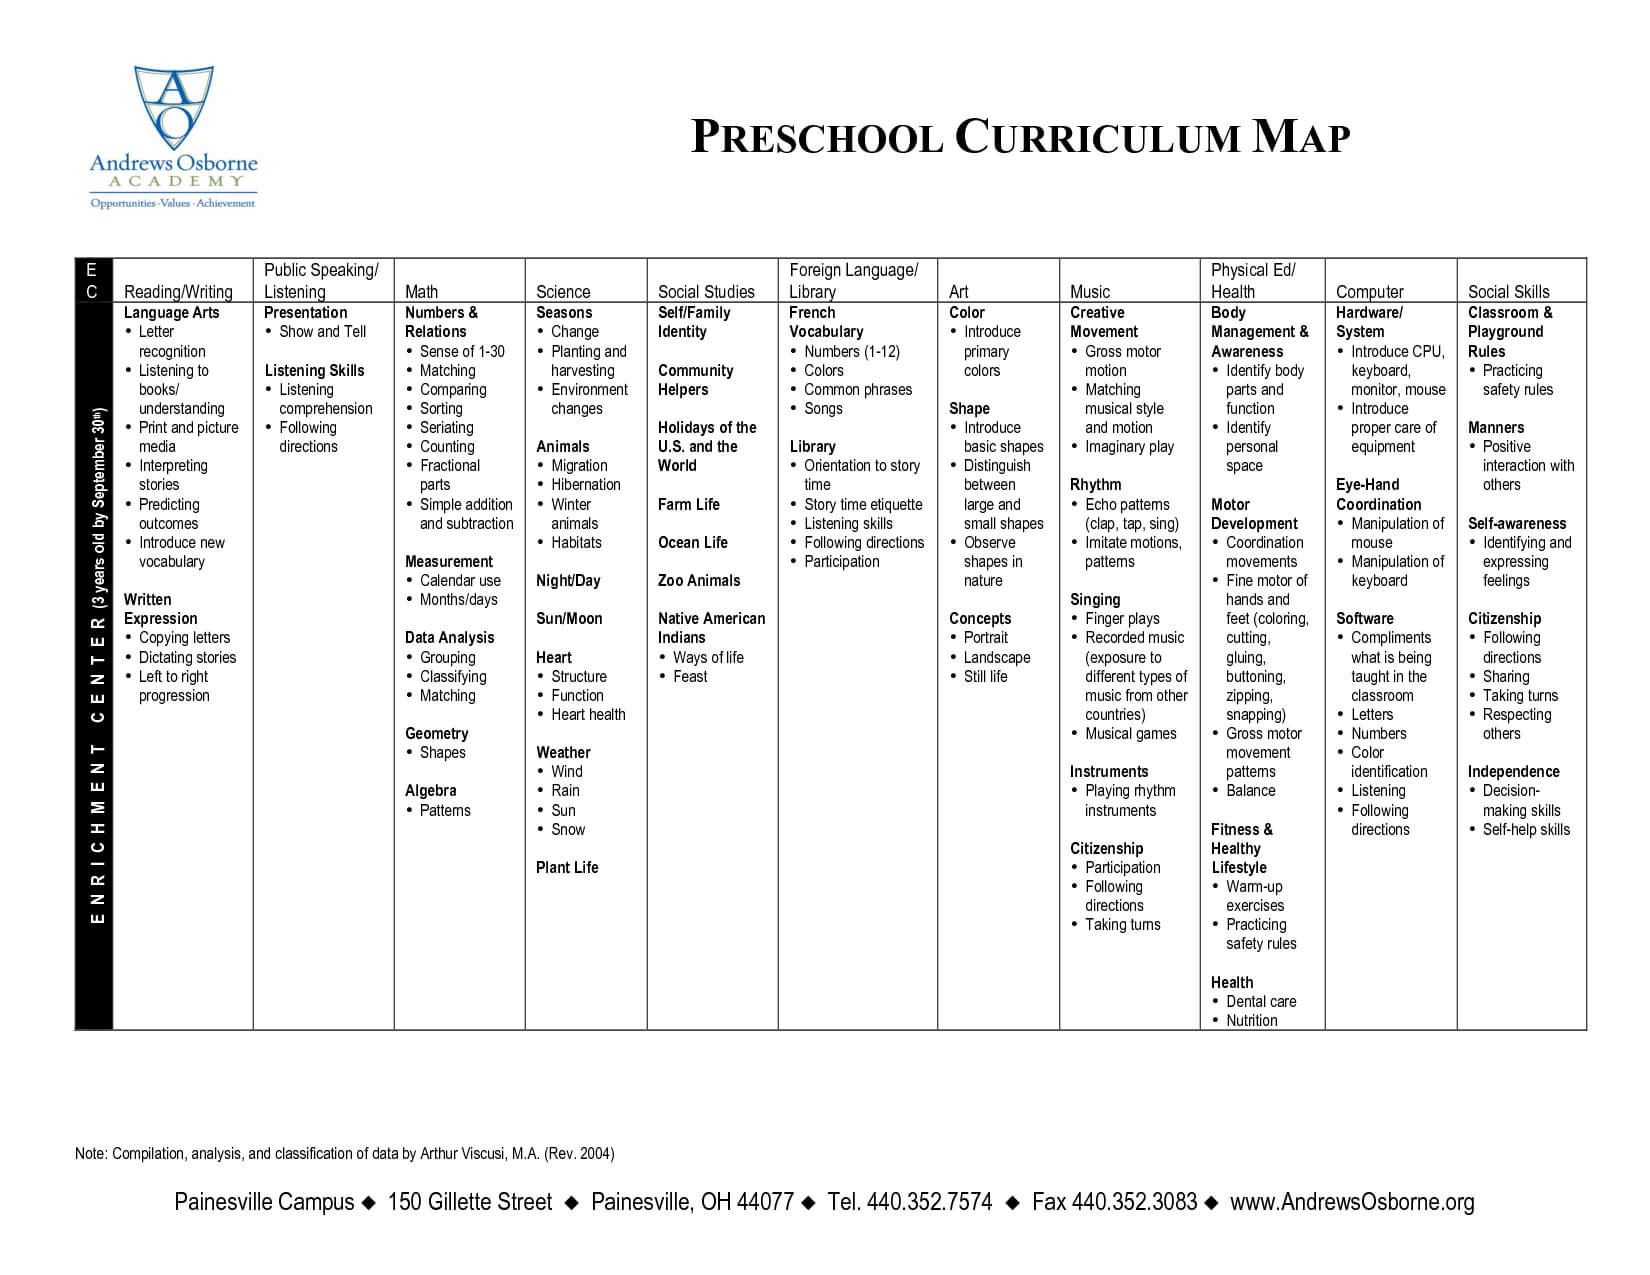 Curriculum Map Templates. Skills Matrix Matrix Roles. Mrs In Blank Curriculum Map Template